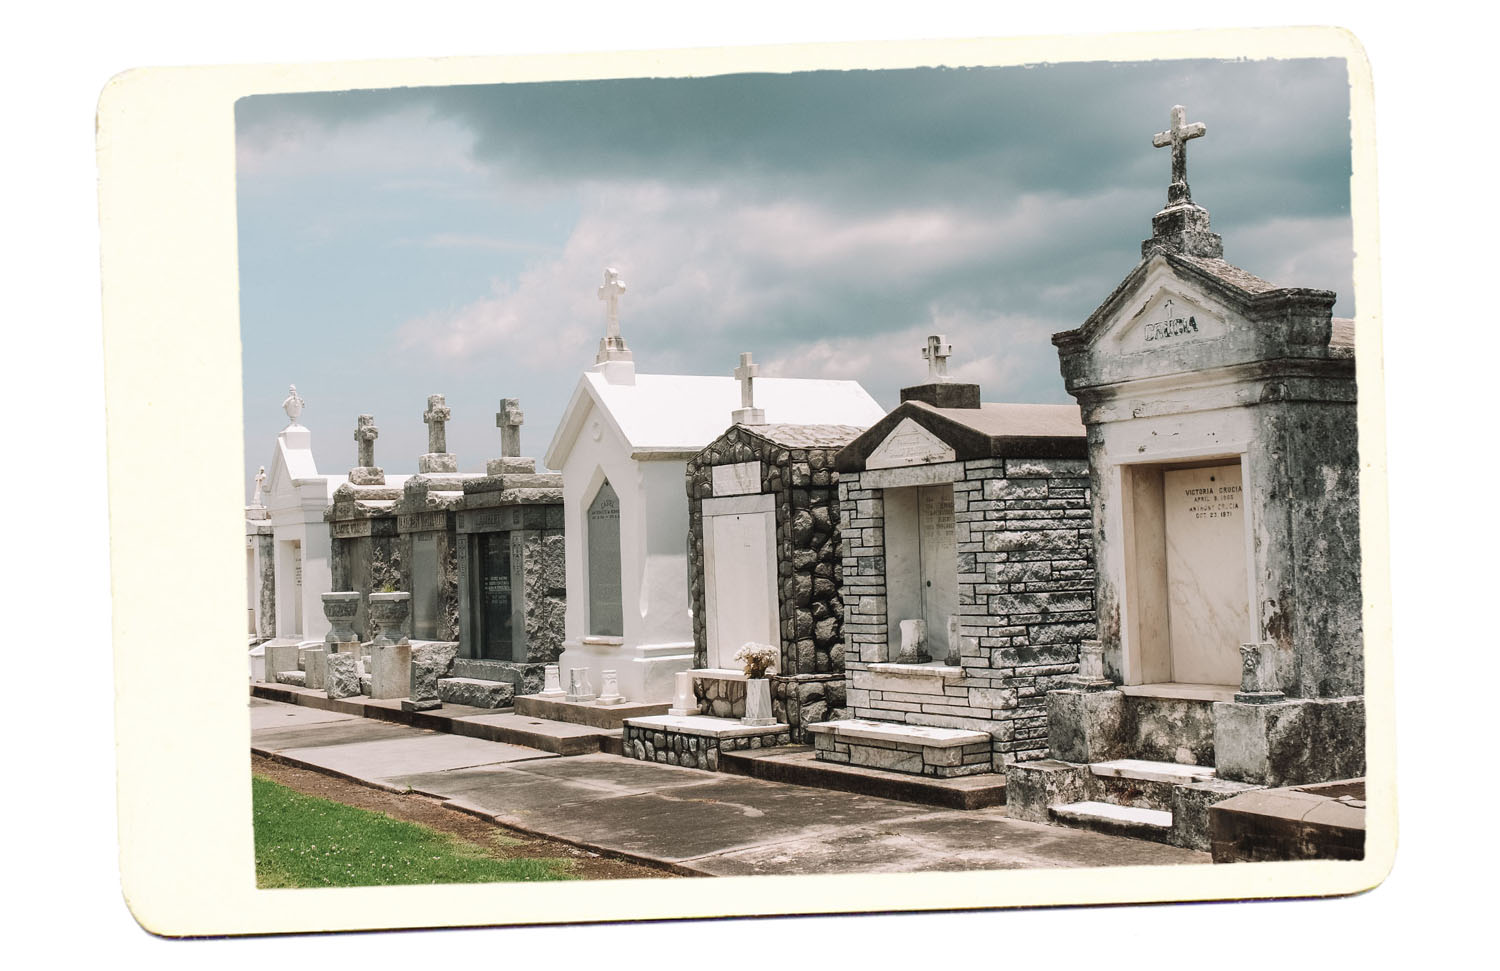 Friedhof St. Louis New Orleans